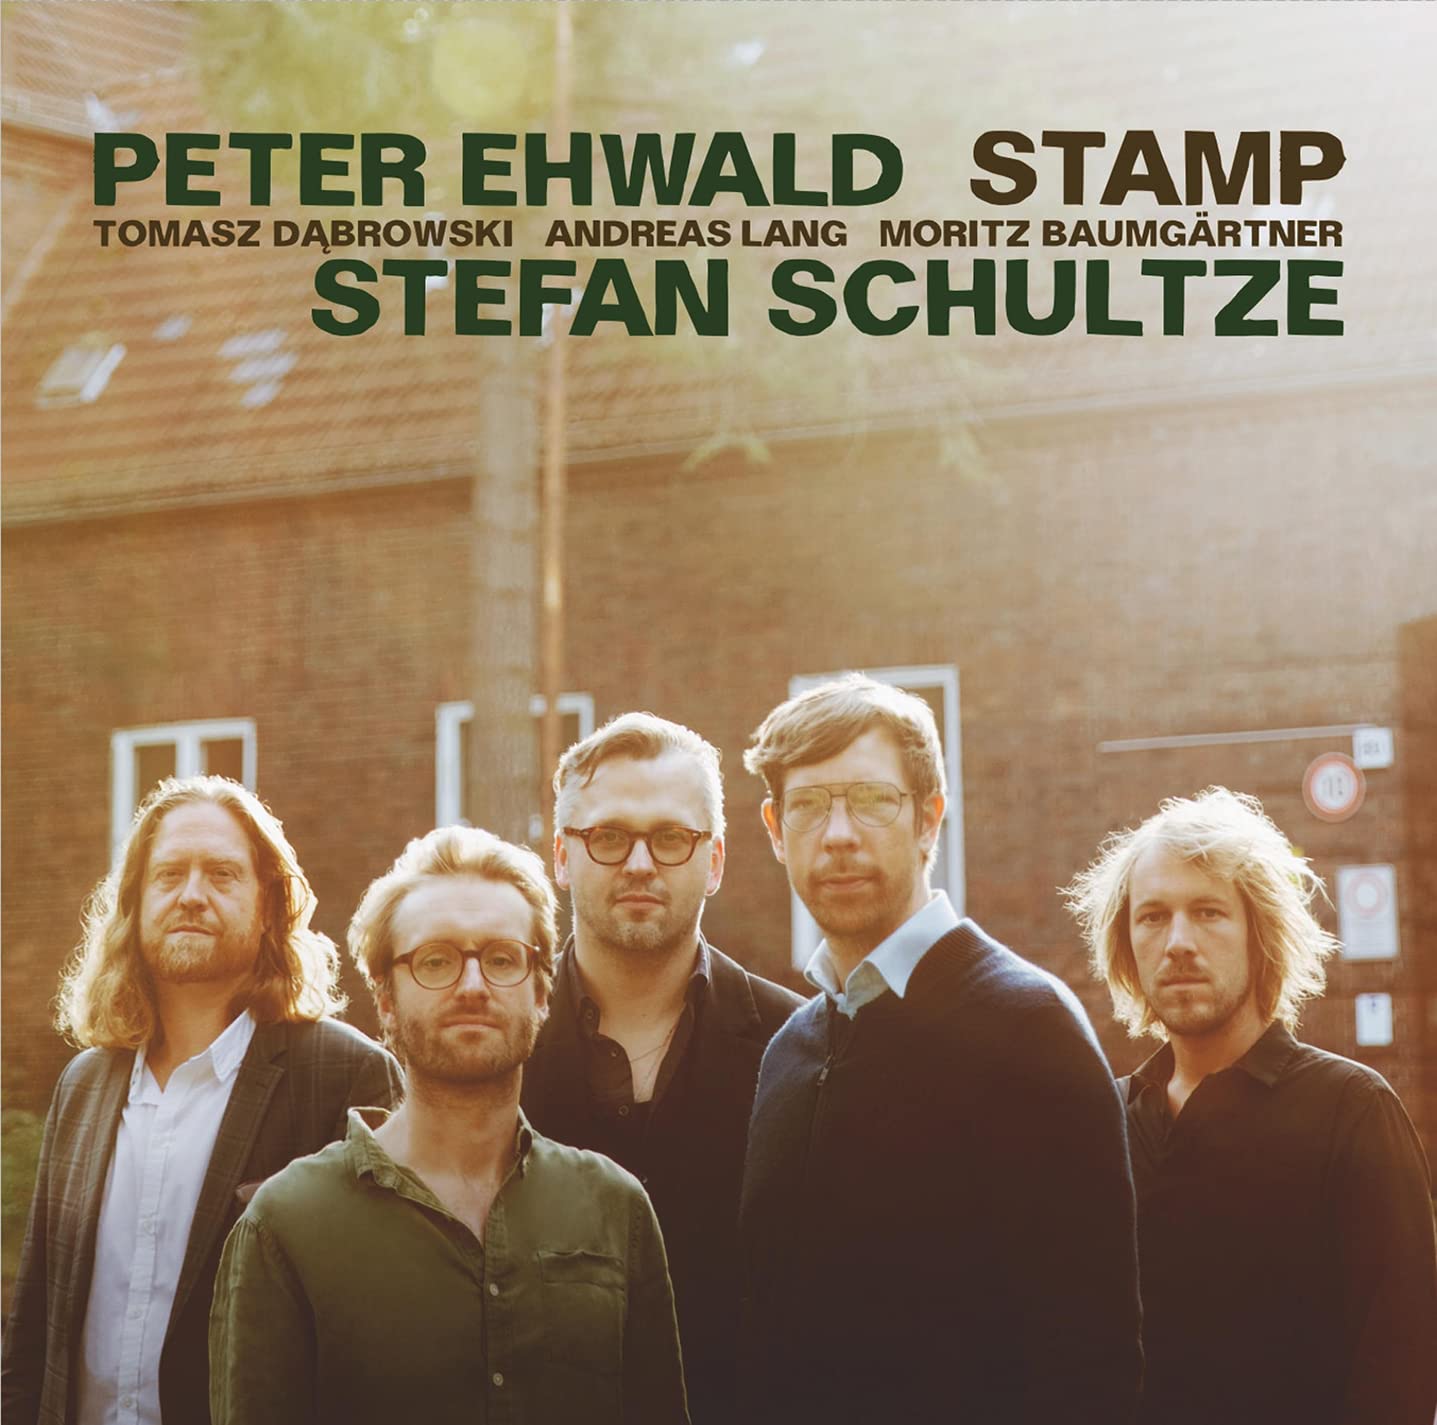 PETER EHWALD - Peter Ehwald & Stefan Schultze : Stamp cover 